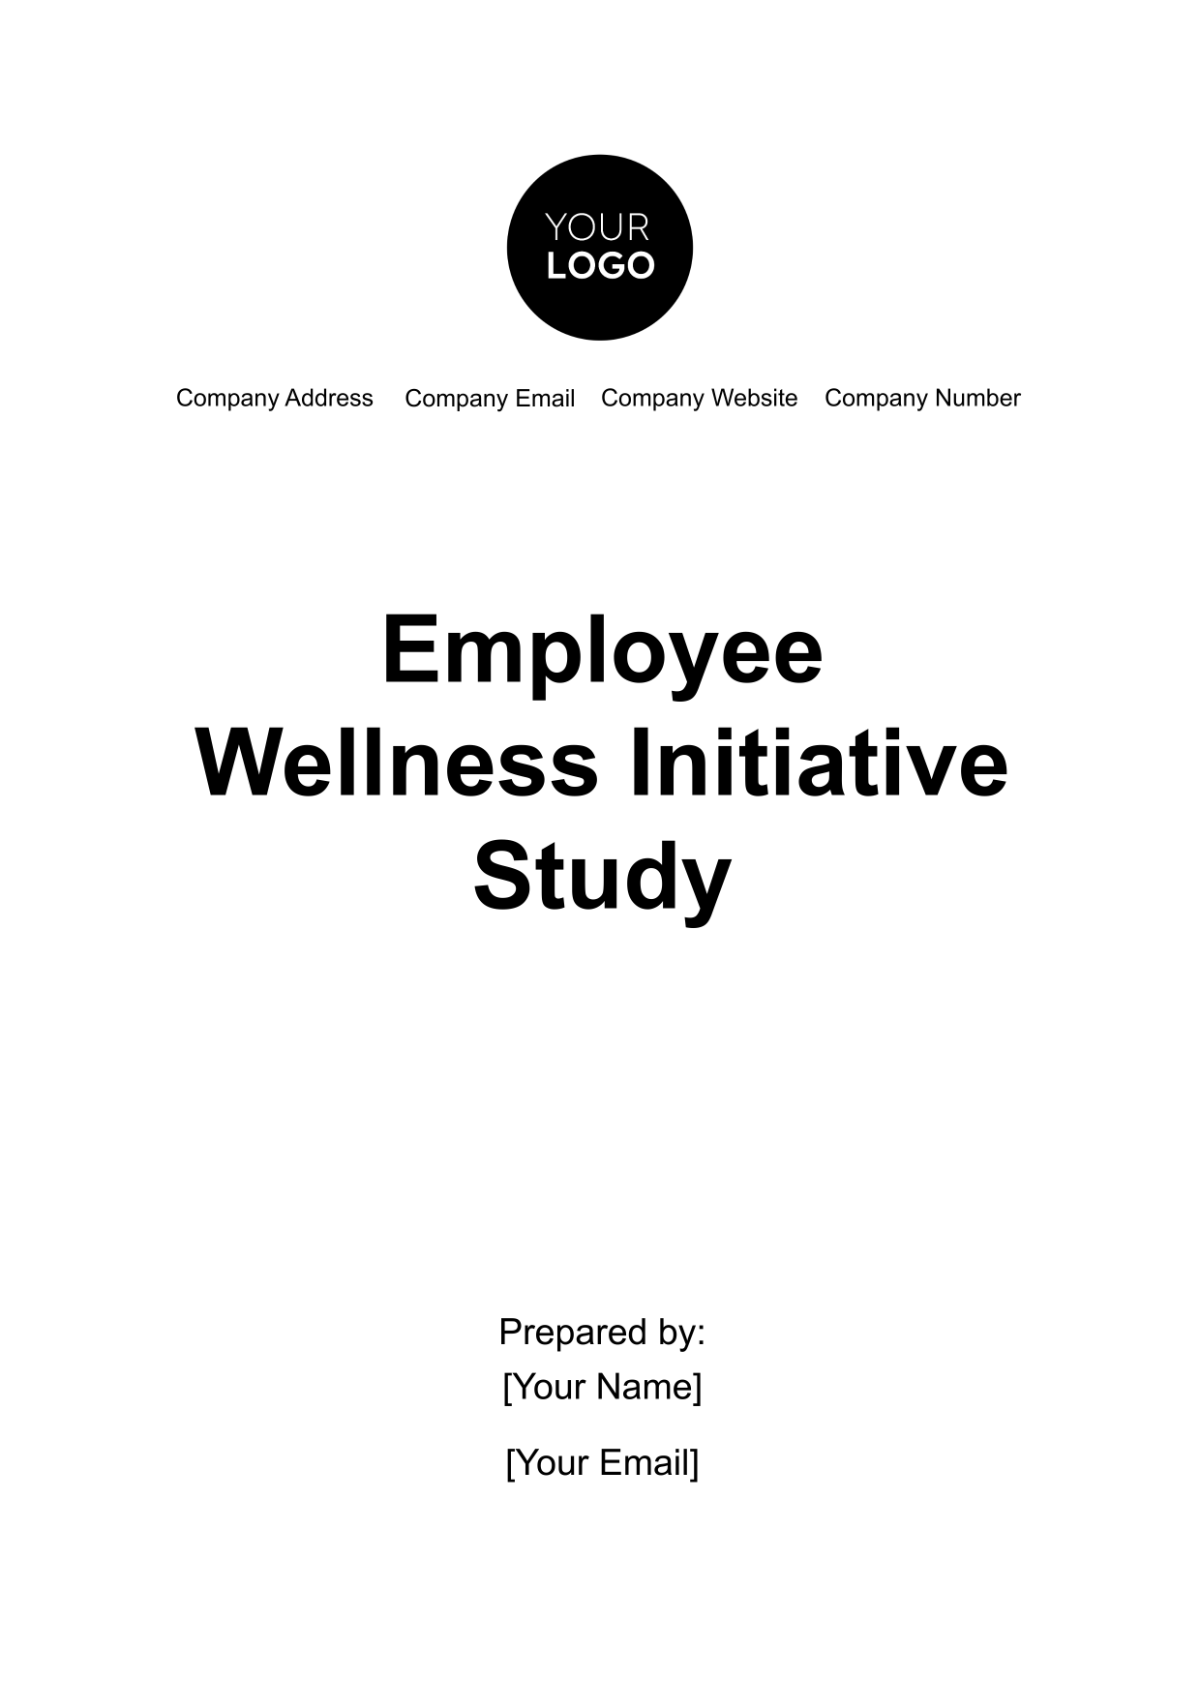 Employee Wellness Initiative Study Template